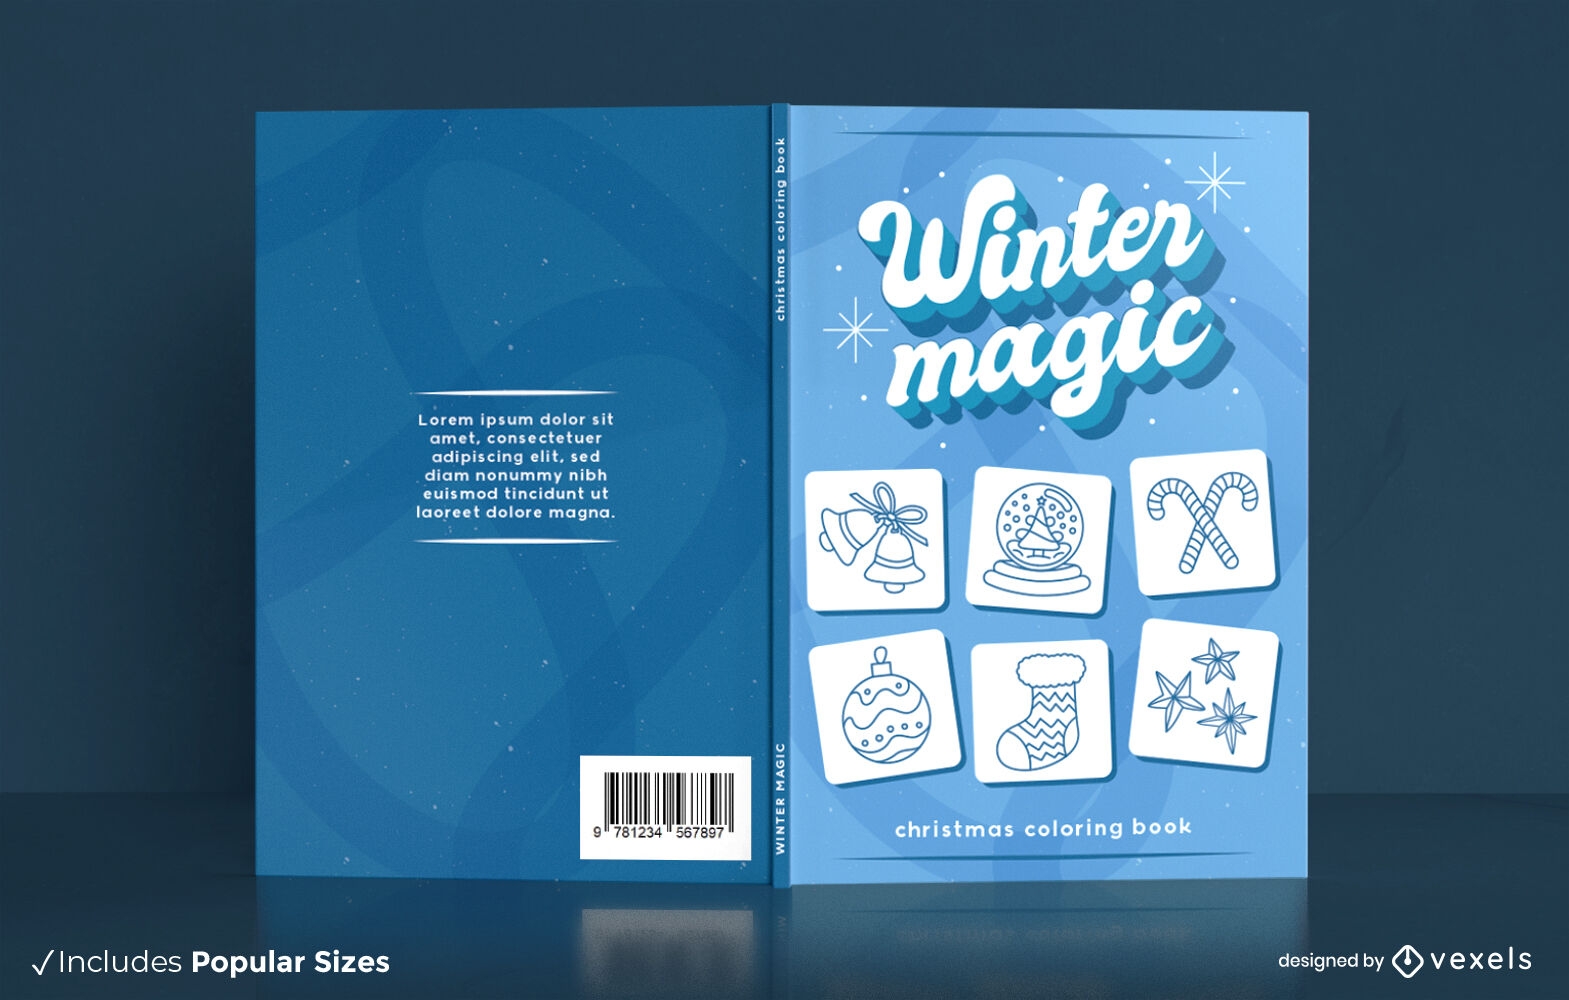 Winter magic coloring book cover design